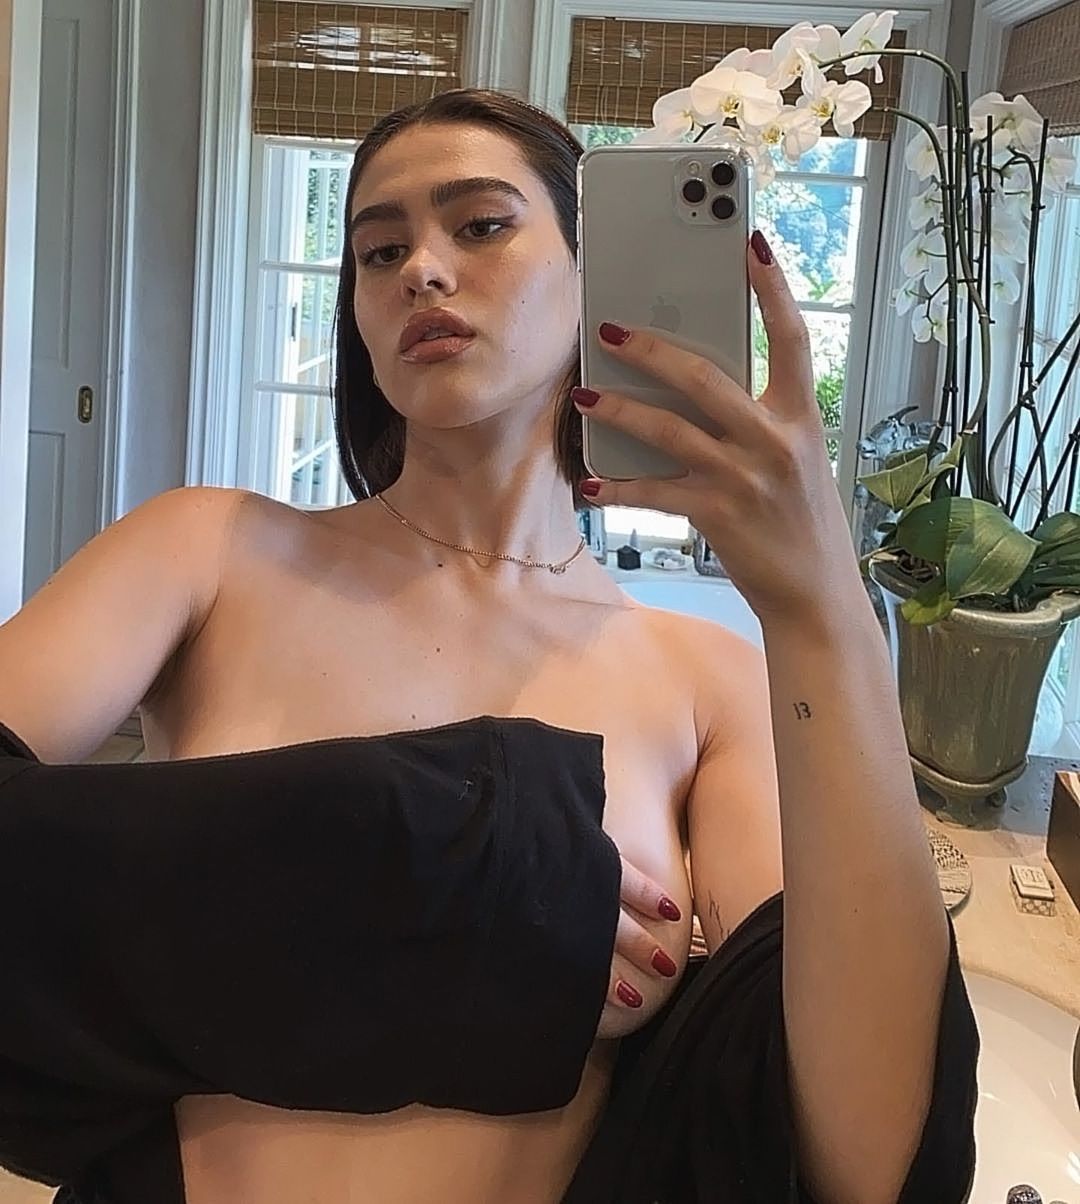 Amelia Gray Hamlin Nude & Sexy (243 Private Photos + Videos)